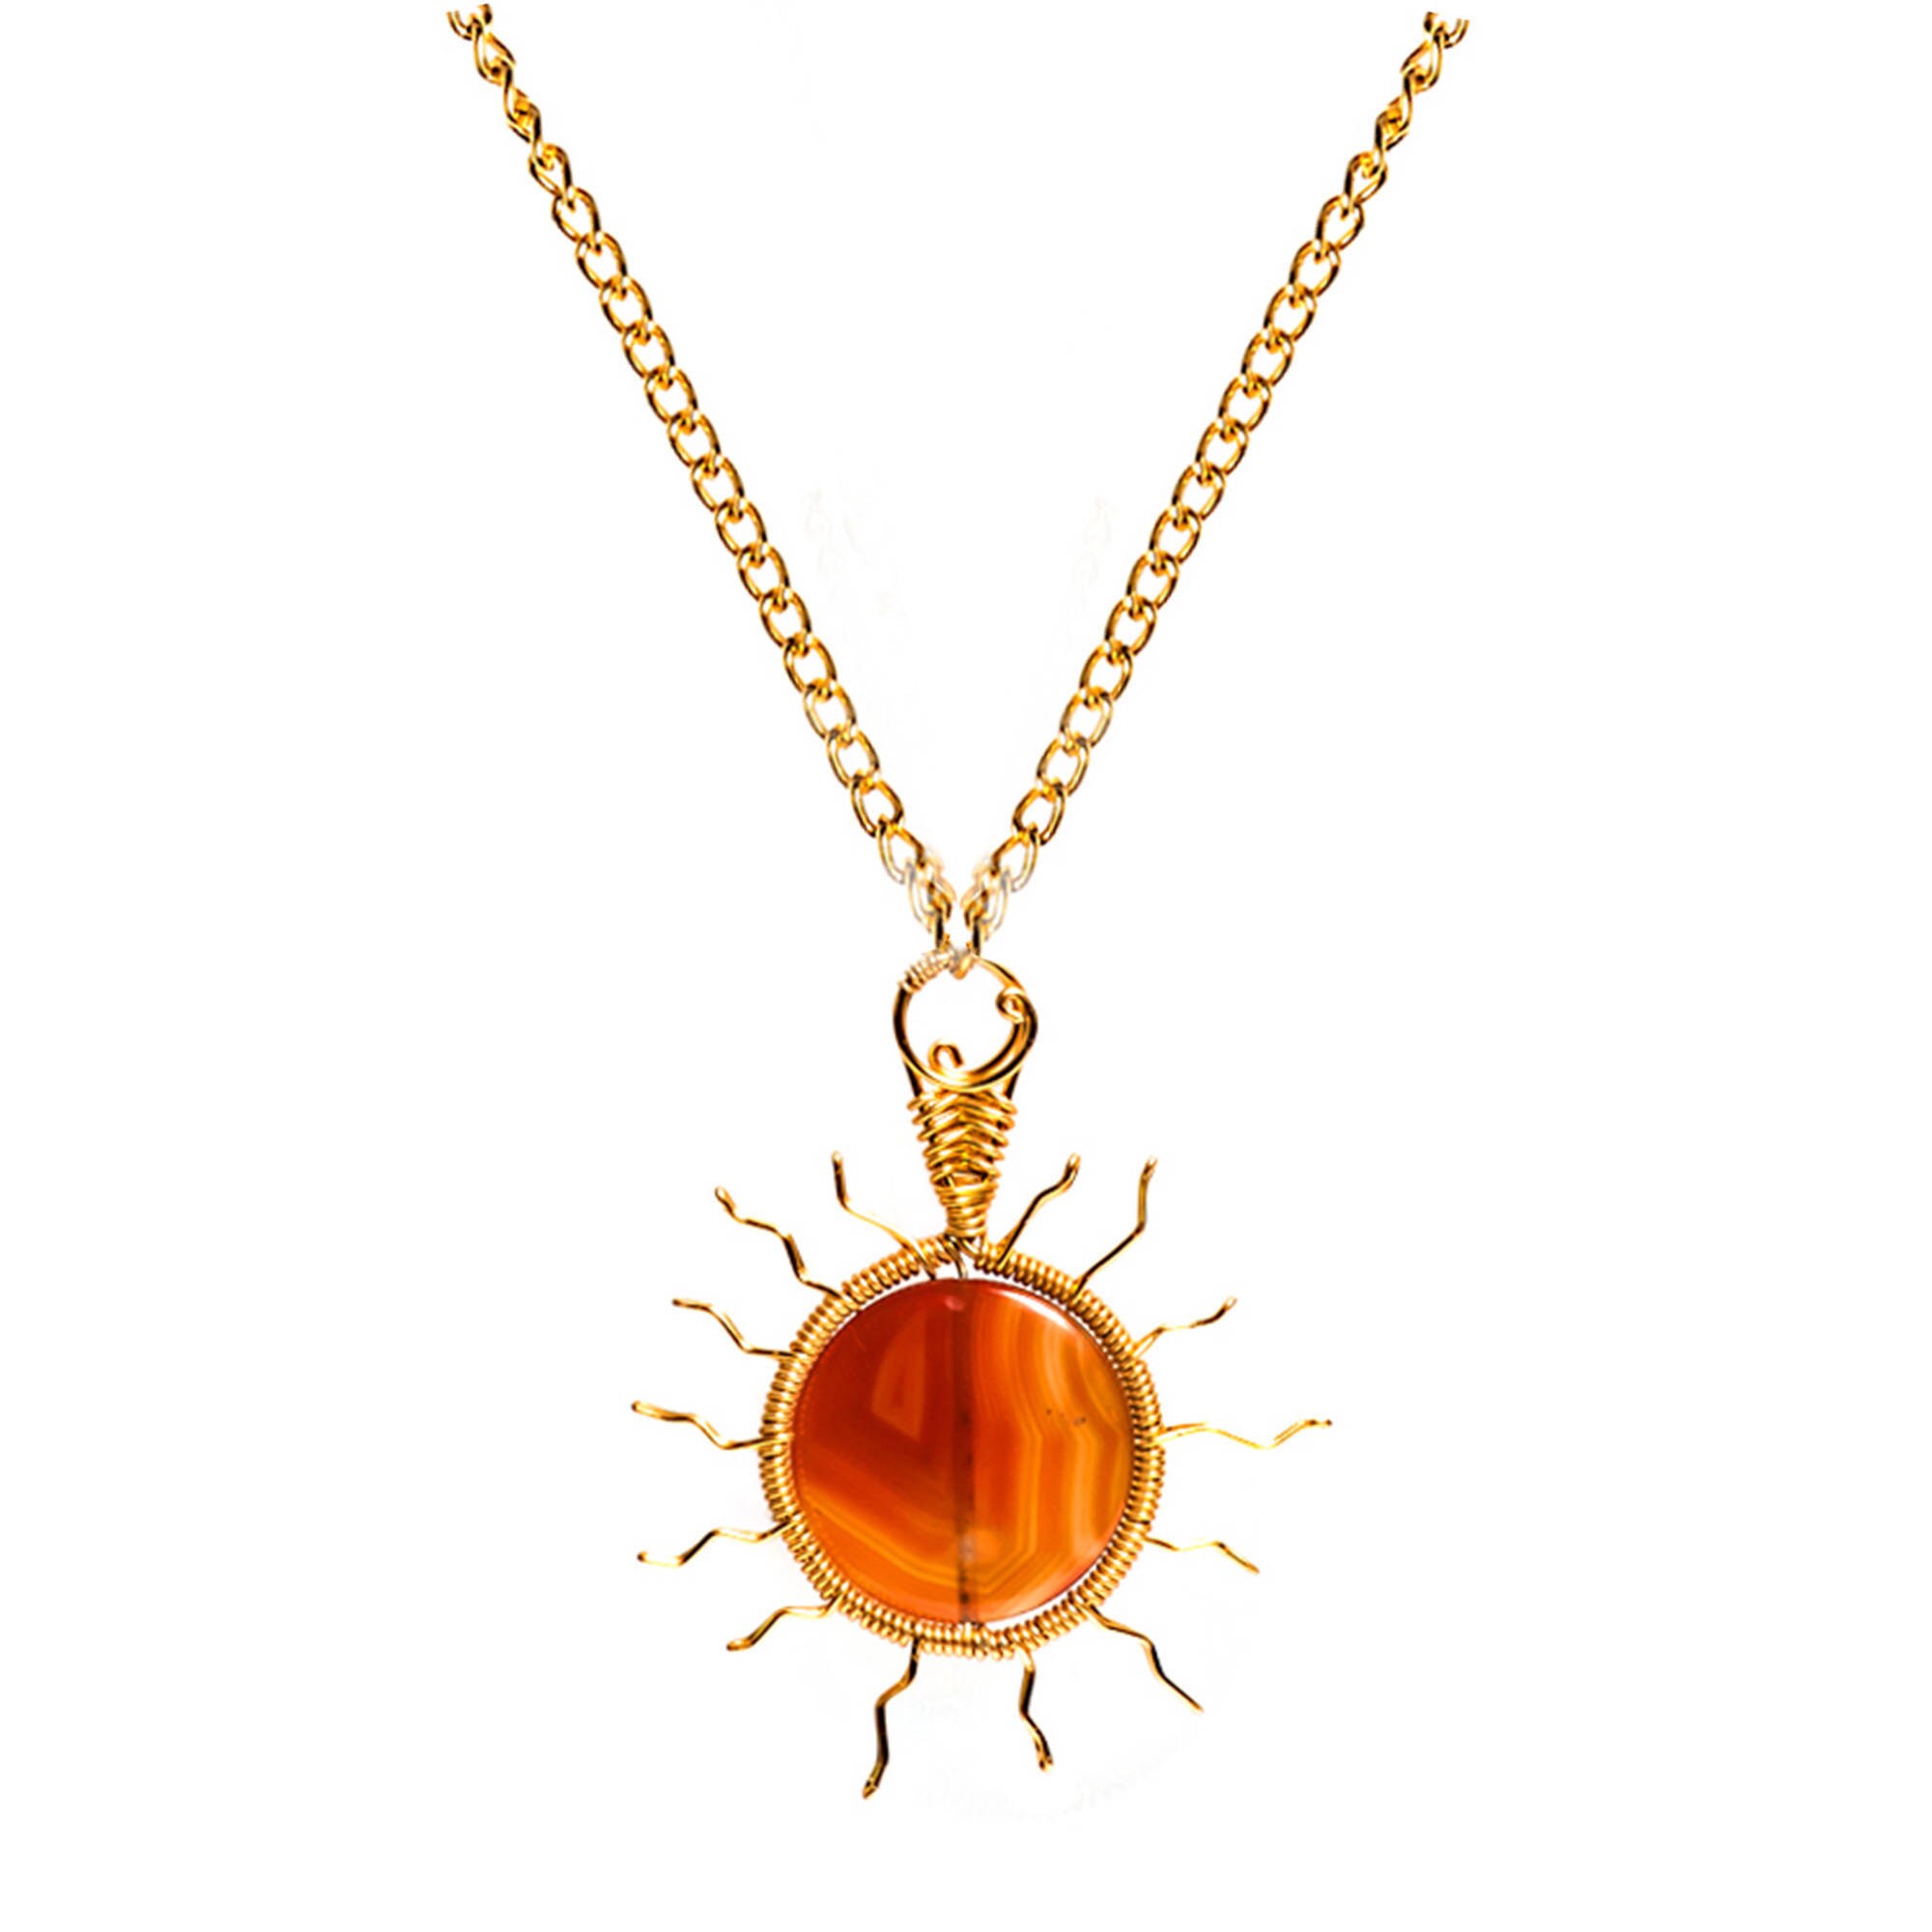 orange agate jewelry